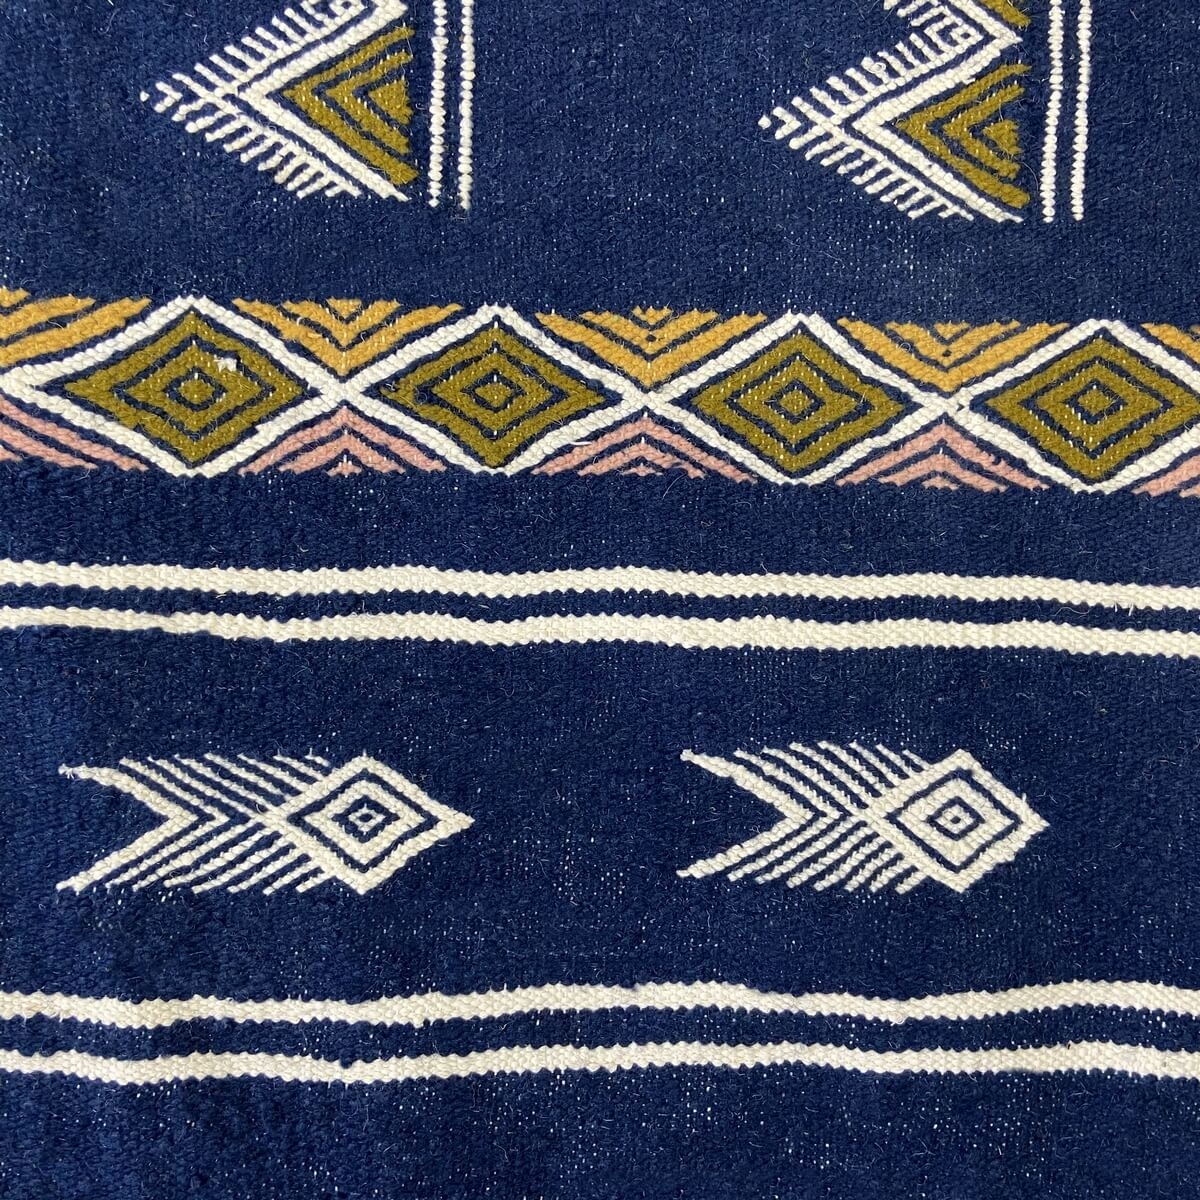 Tapete berbere Tapete Kilim Laarbi 135x235 Azul (Tecidos à mão, Lã) Tapete tunisiano kilim, estilo marroquino. Tapete retangular